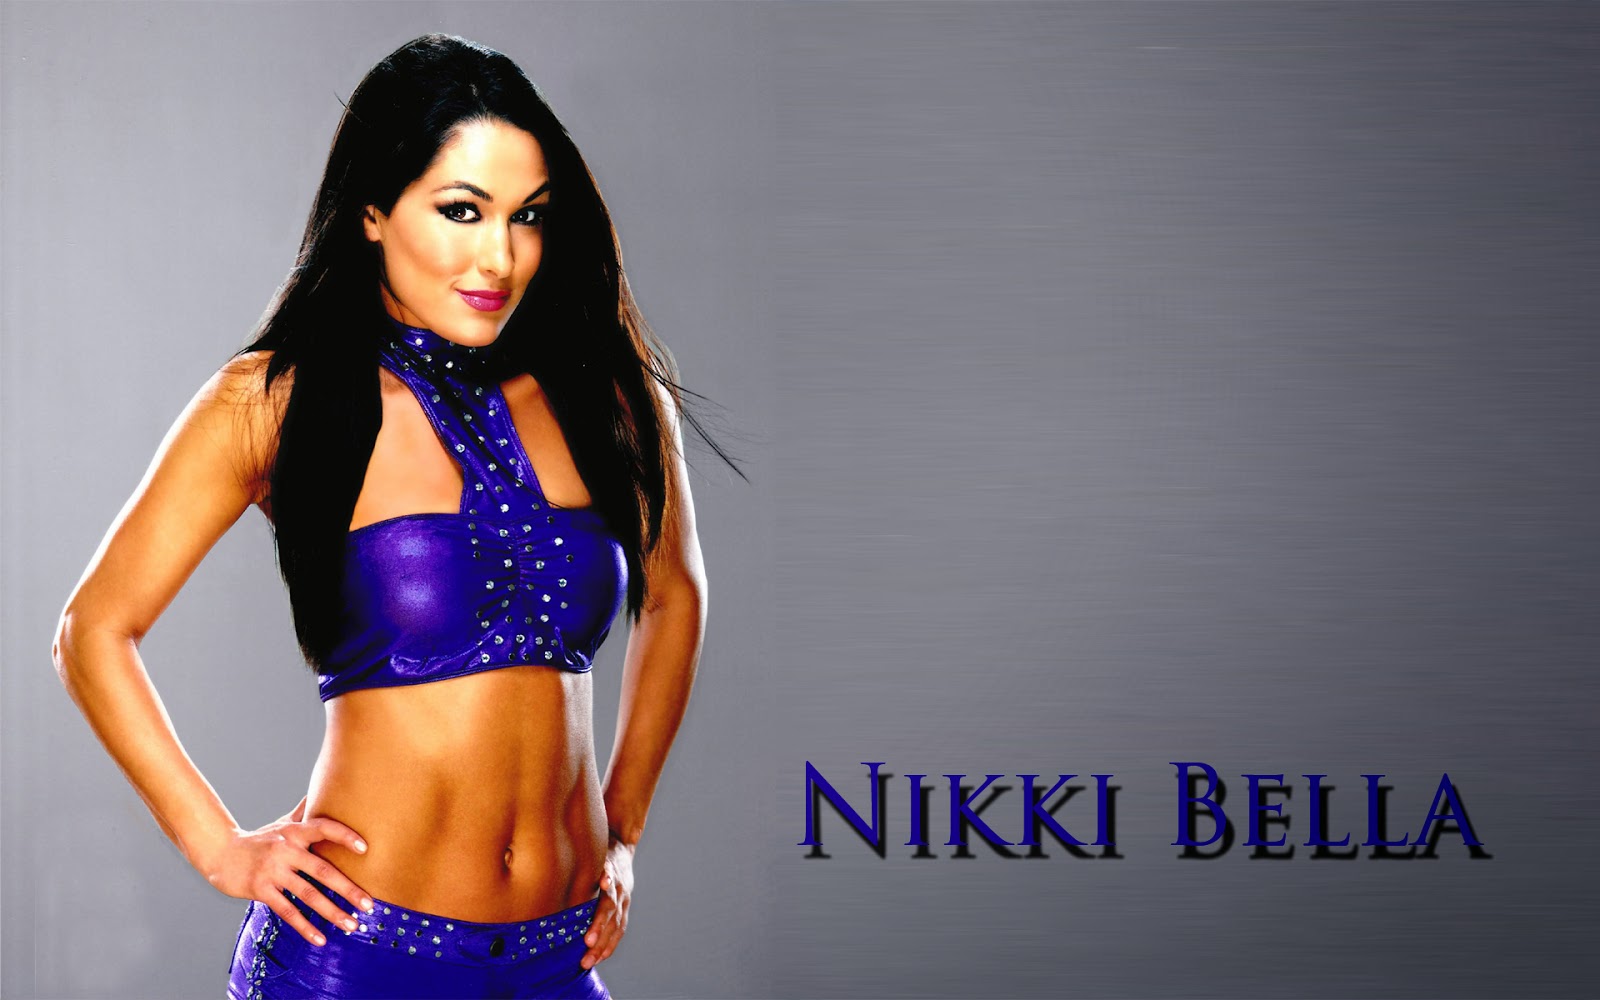 WWE Divas Images and Latest Sports News: Nikki Bella High Definesen Wallpapers Free ...1600 x 1000